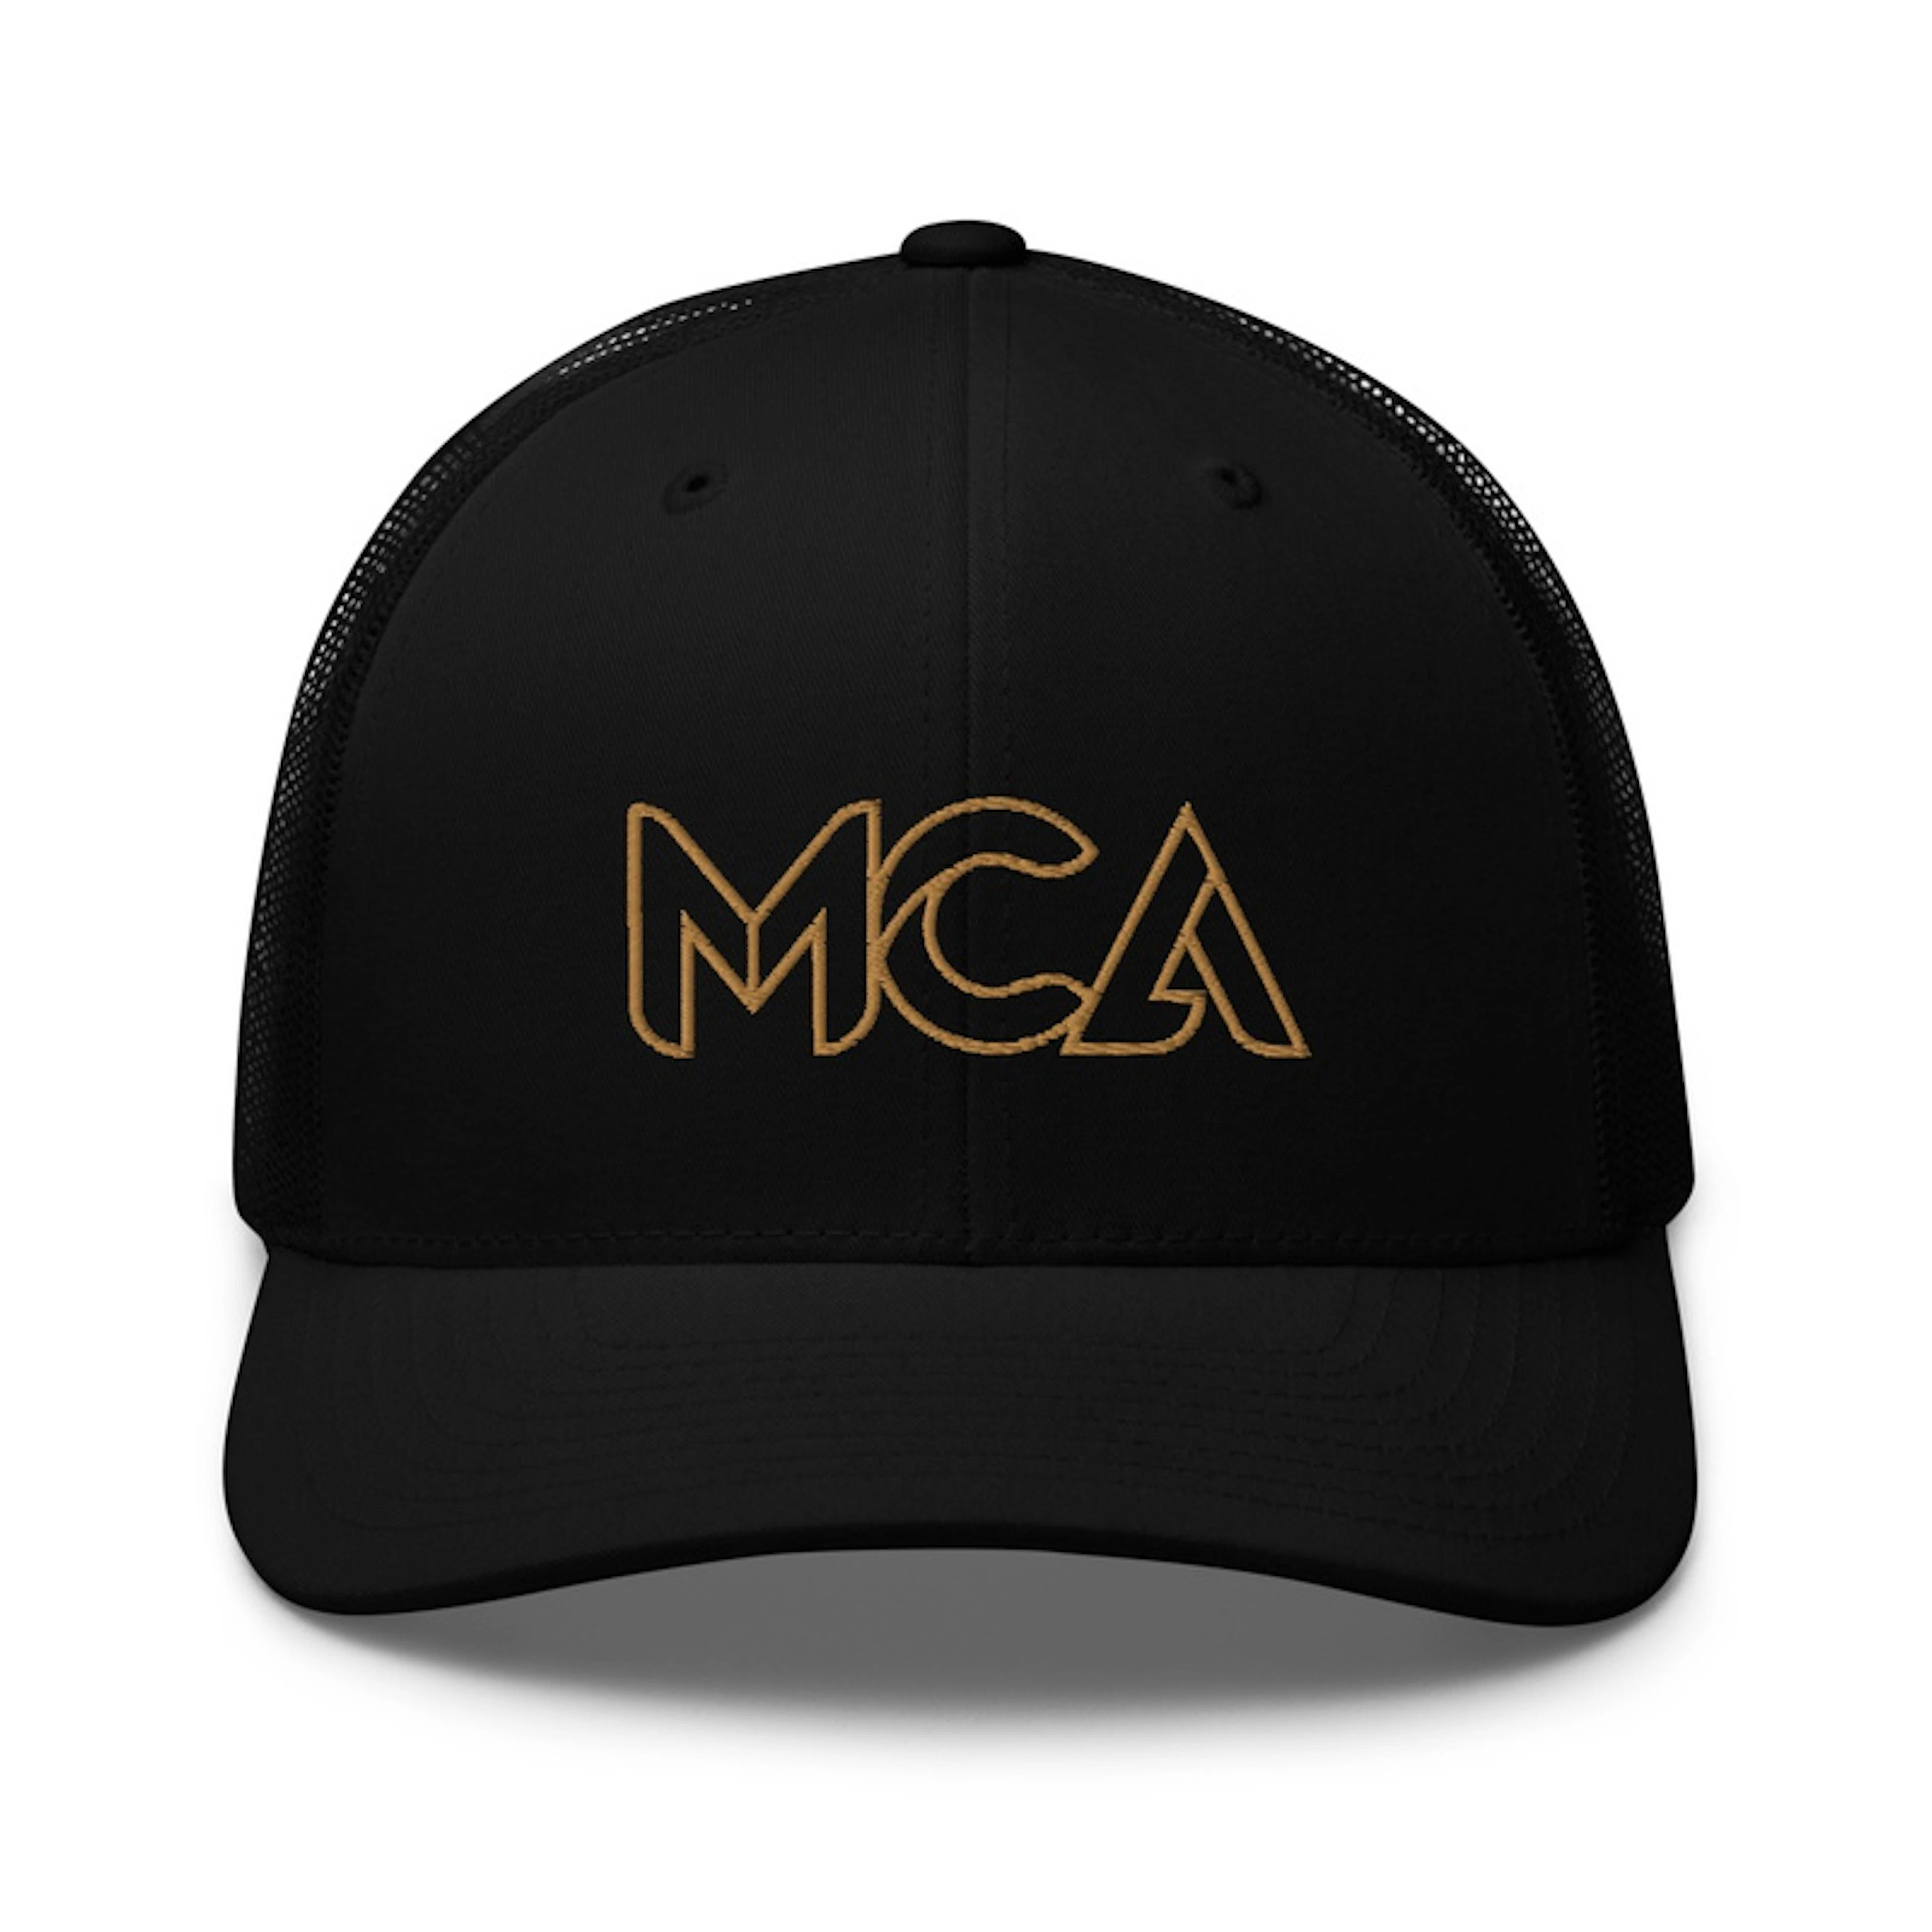 MCA logo embroidered hat